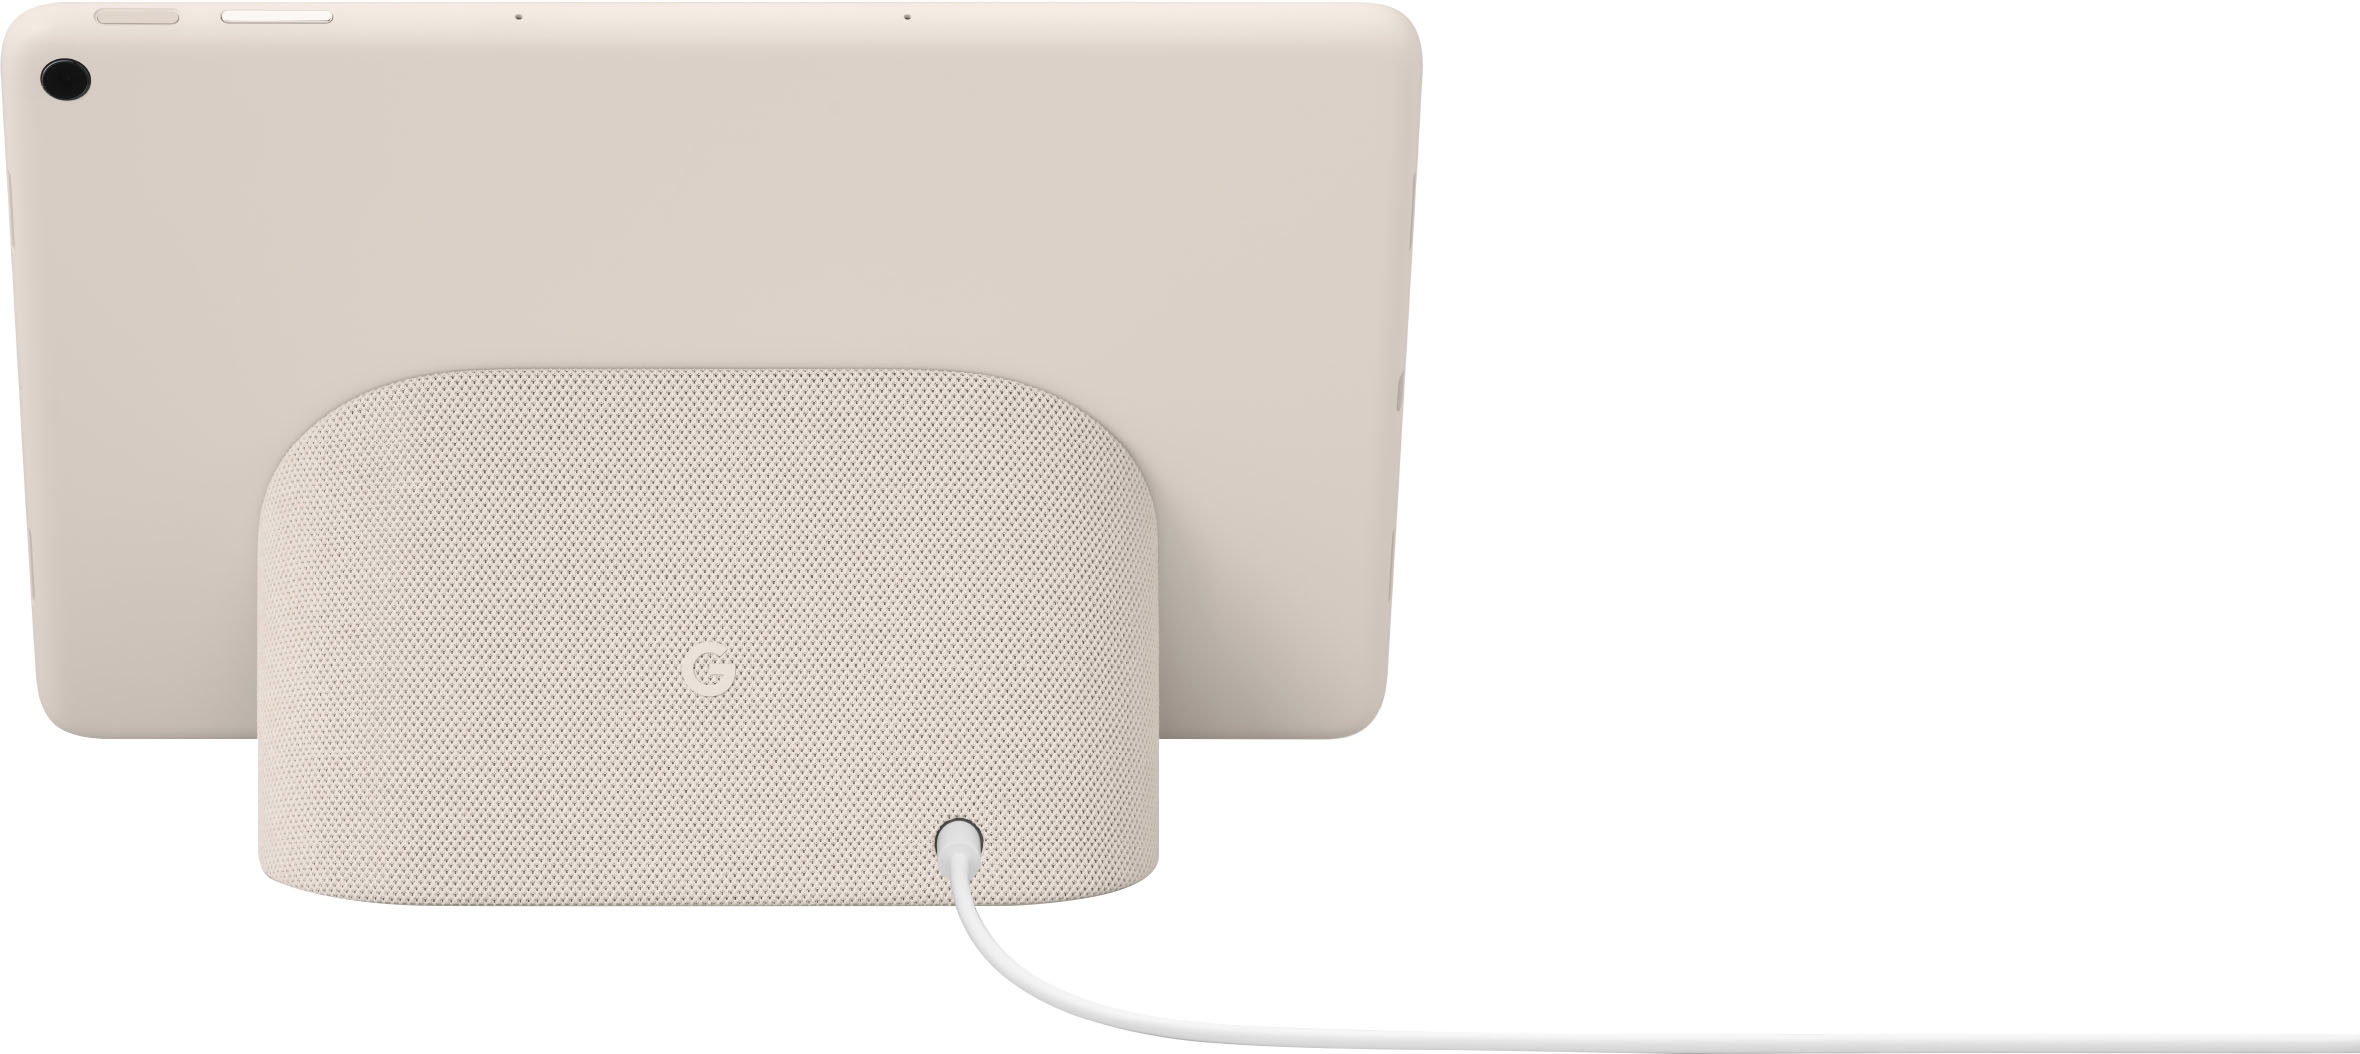 Google Pixel Tablet with Charging Speaker Dock 11